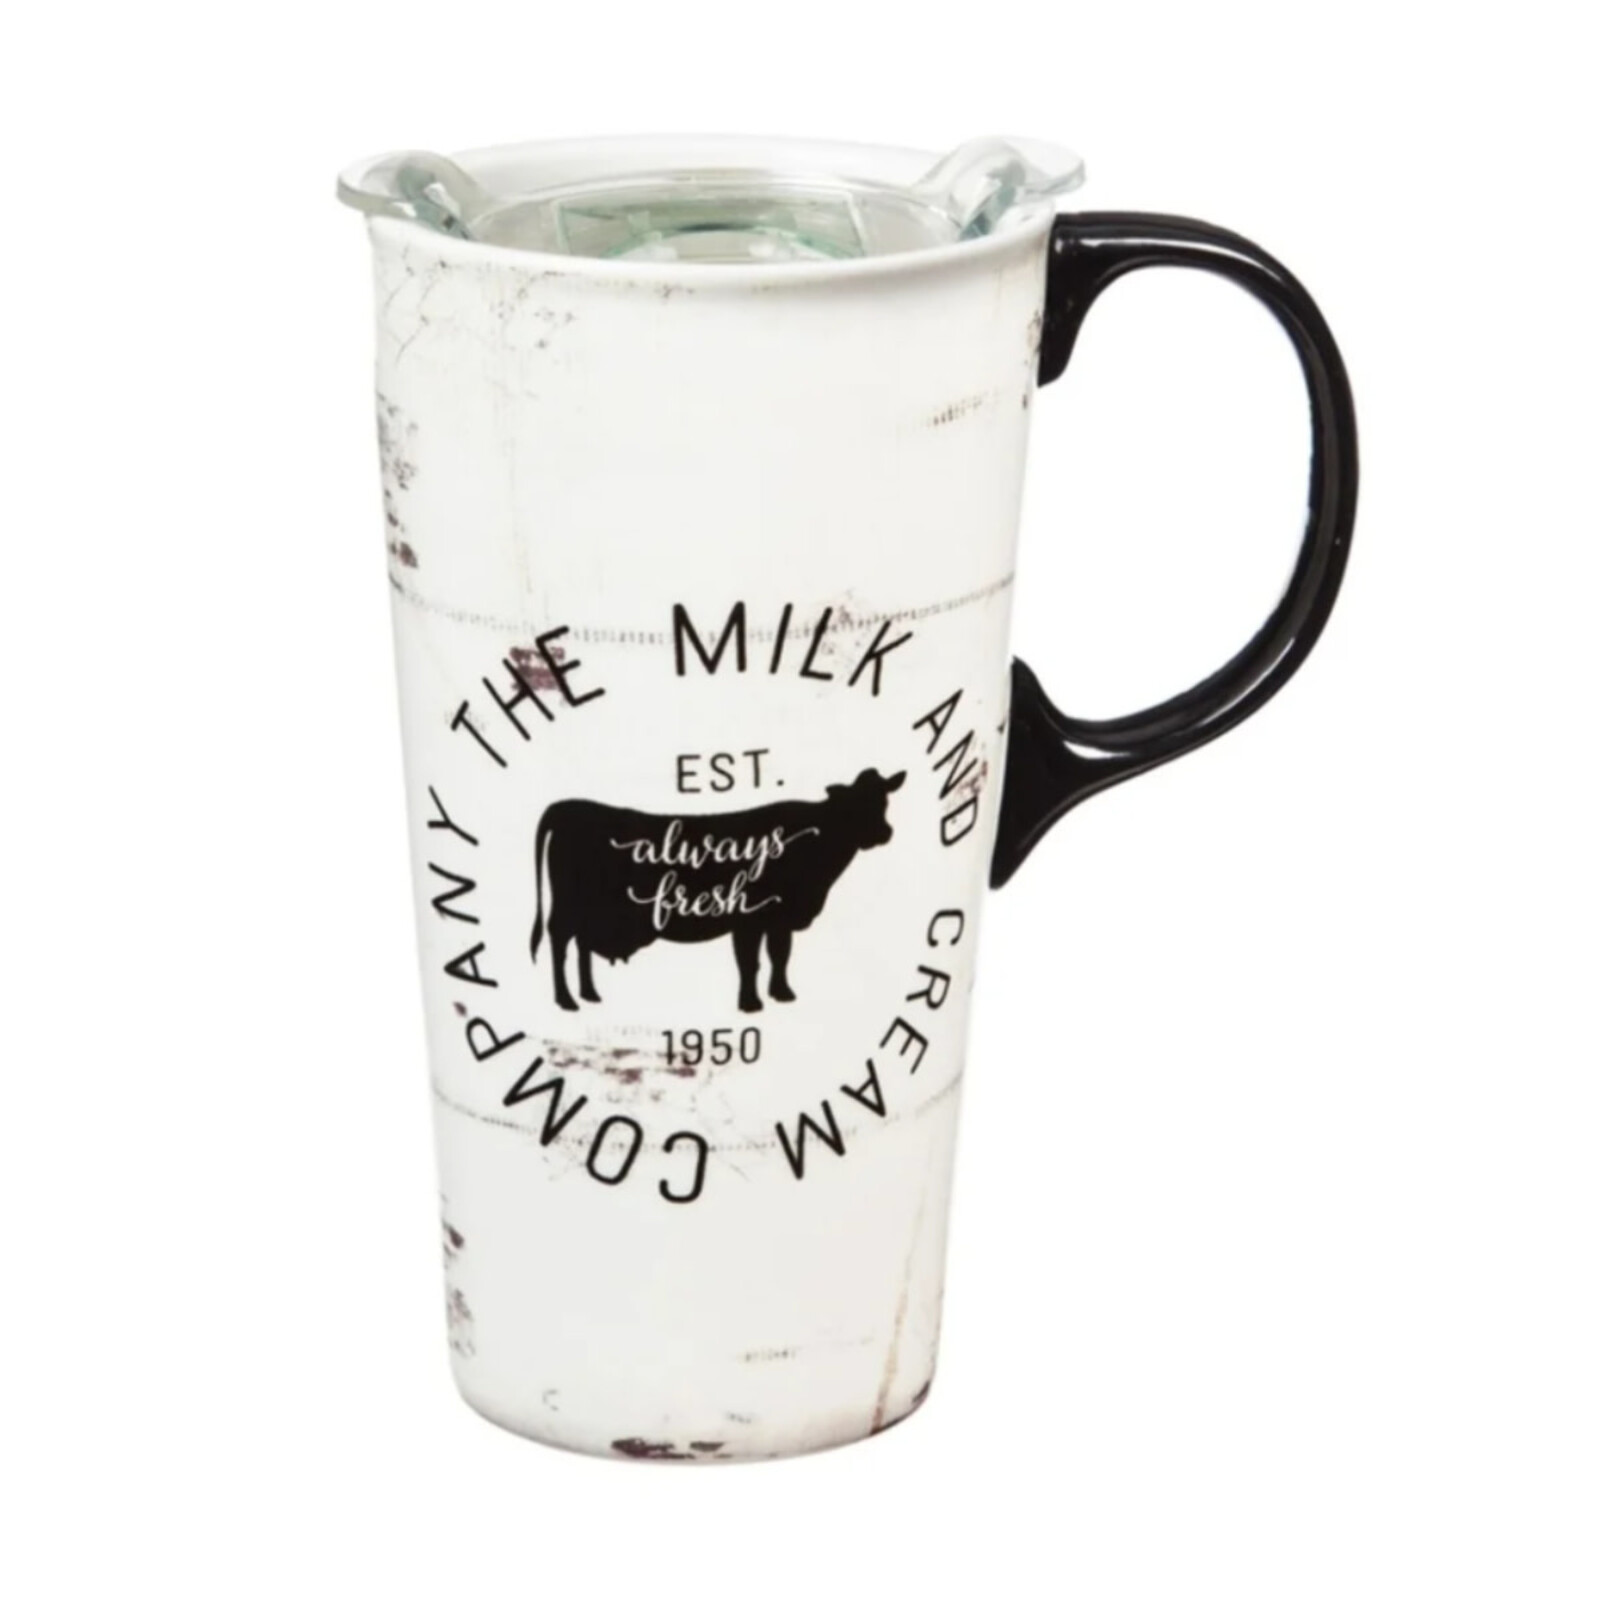 Evergreen Enterprises Ceramic Travel Cup The Milk &Cream Co 3CTC007039 loading=